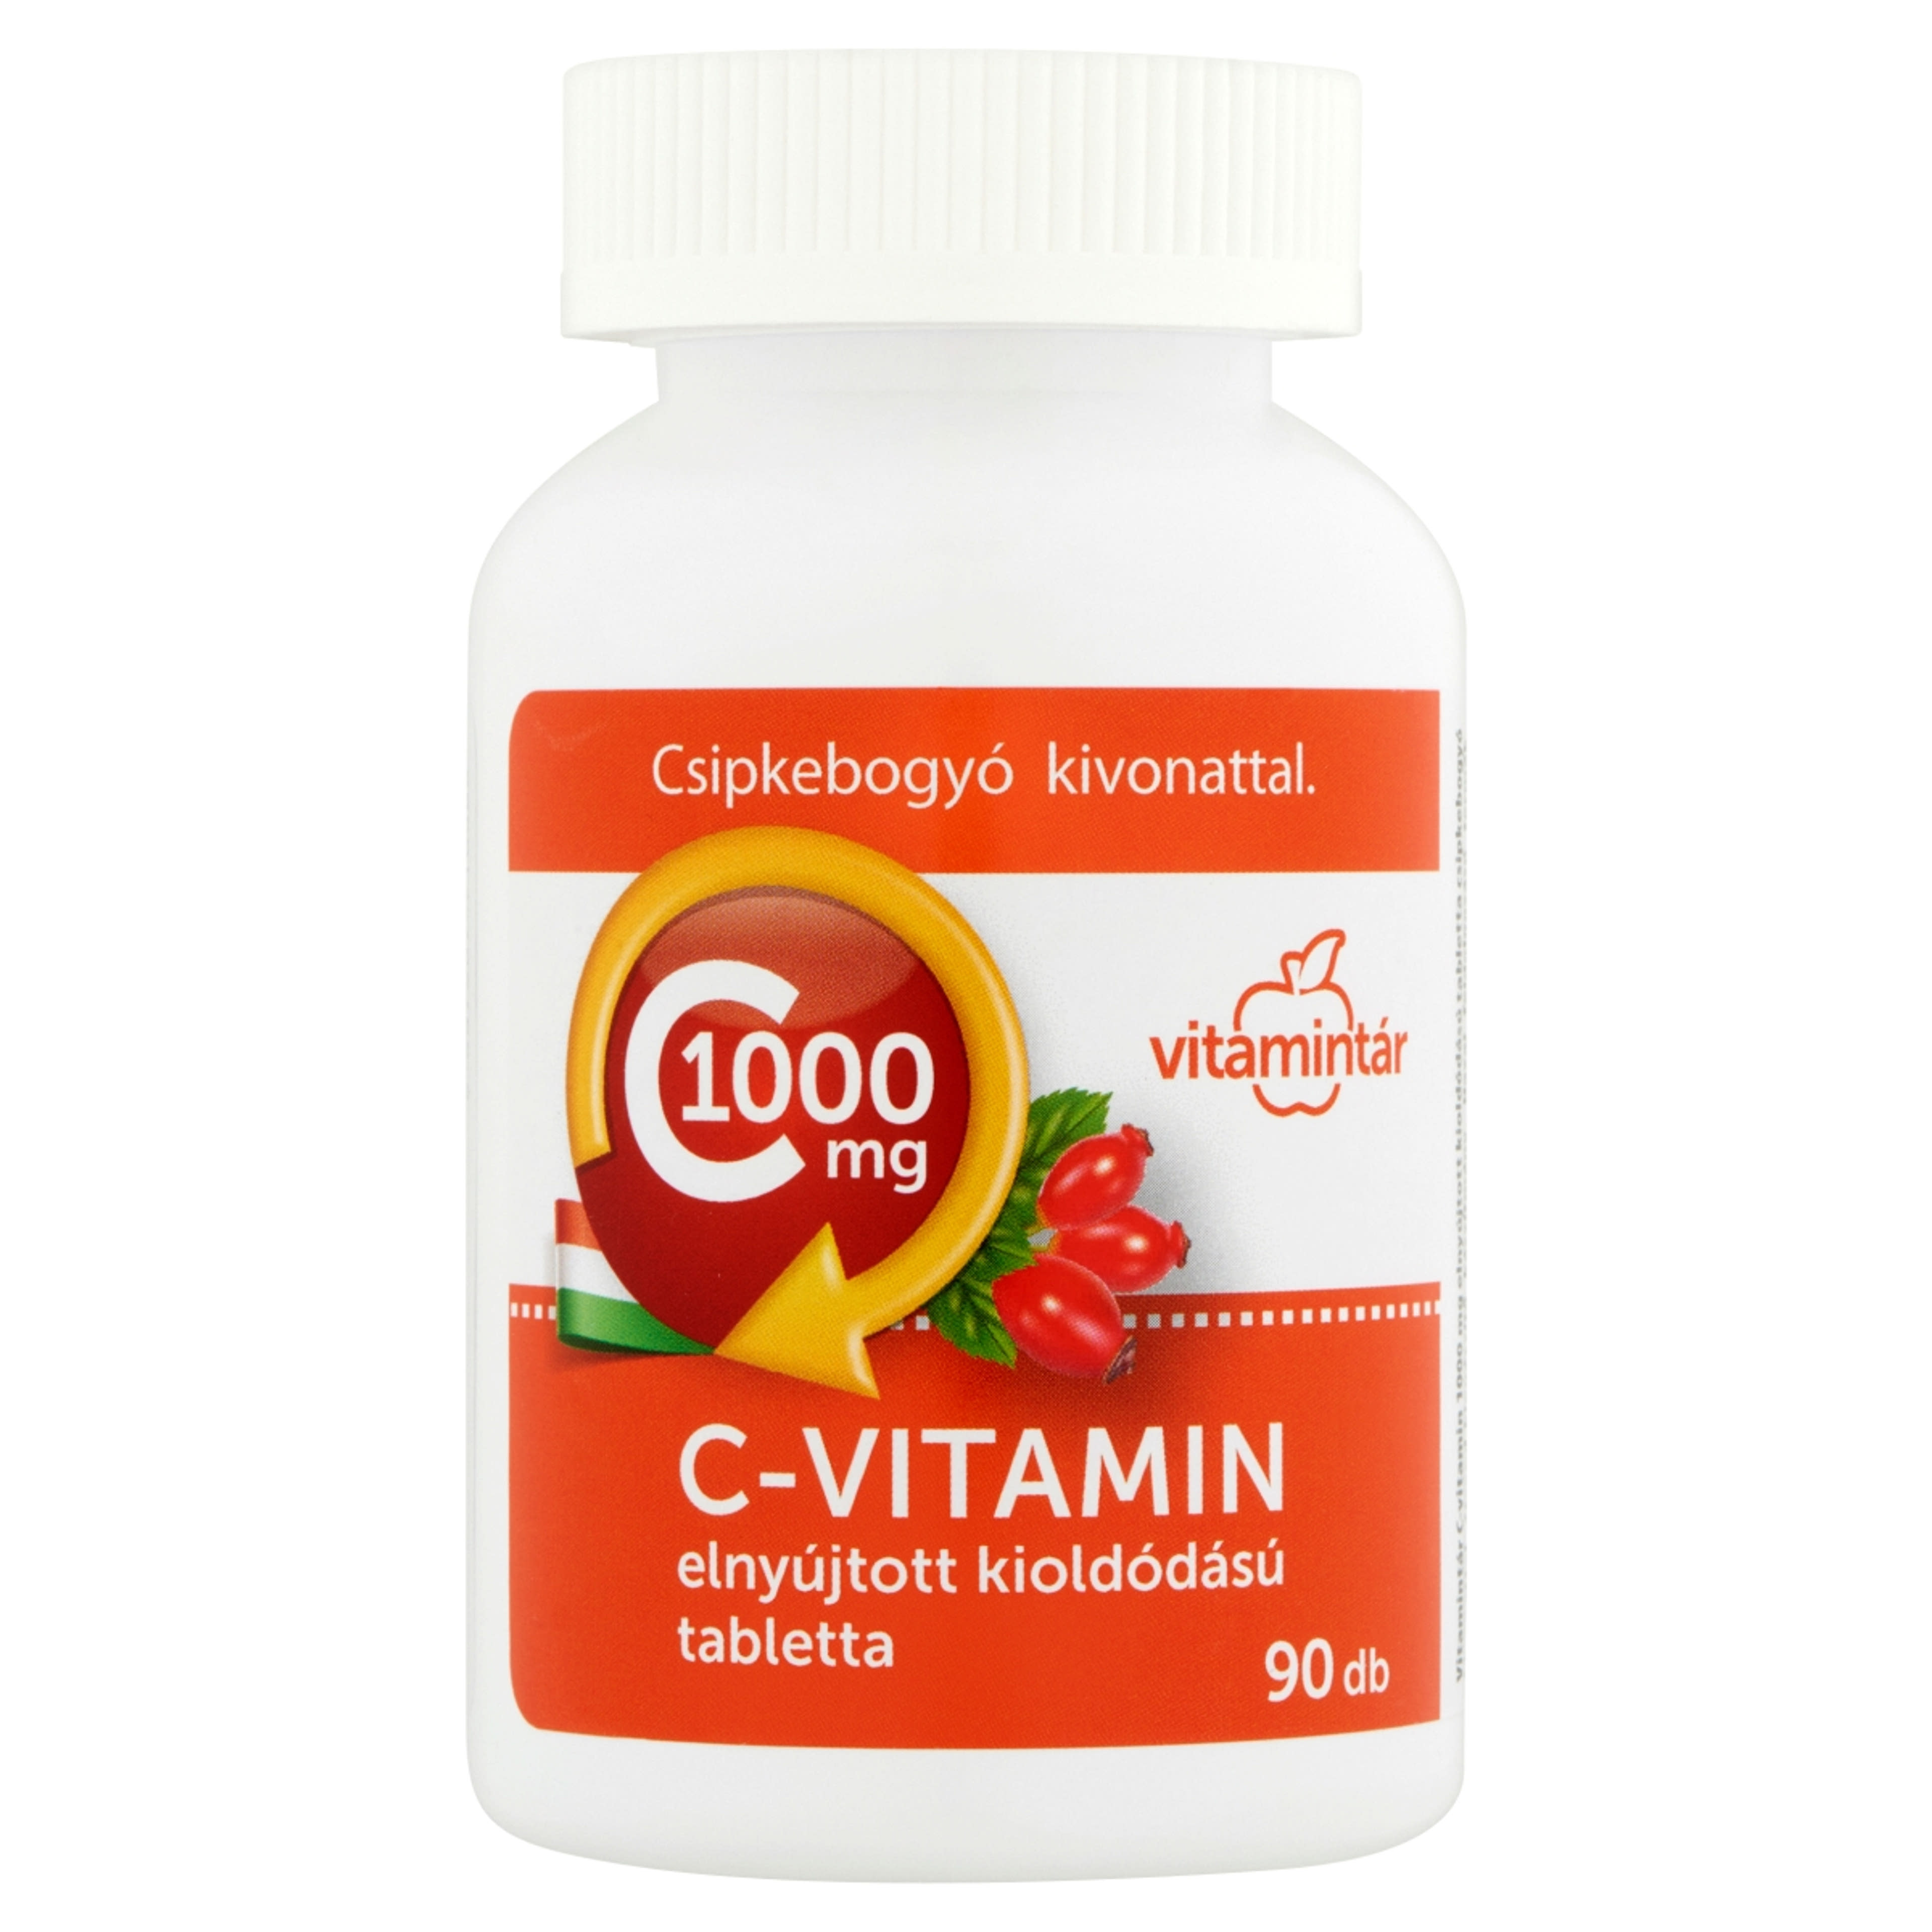 Vitamintár C-Vitamin Csipkebogyó Kivonattal 1000mg Tabletta - 90 db